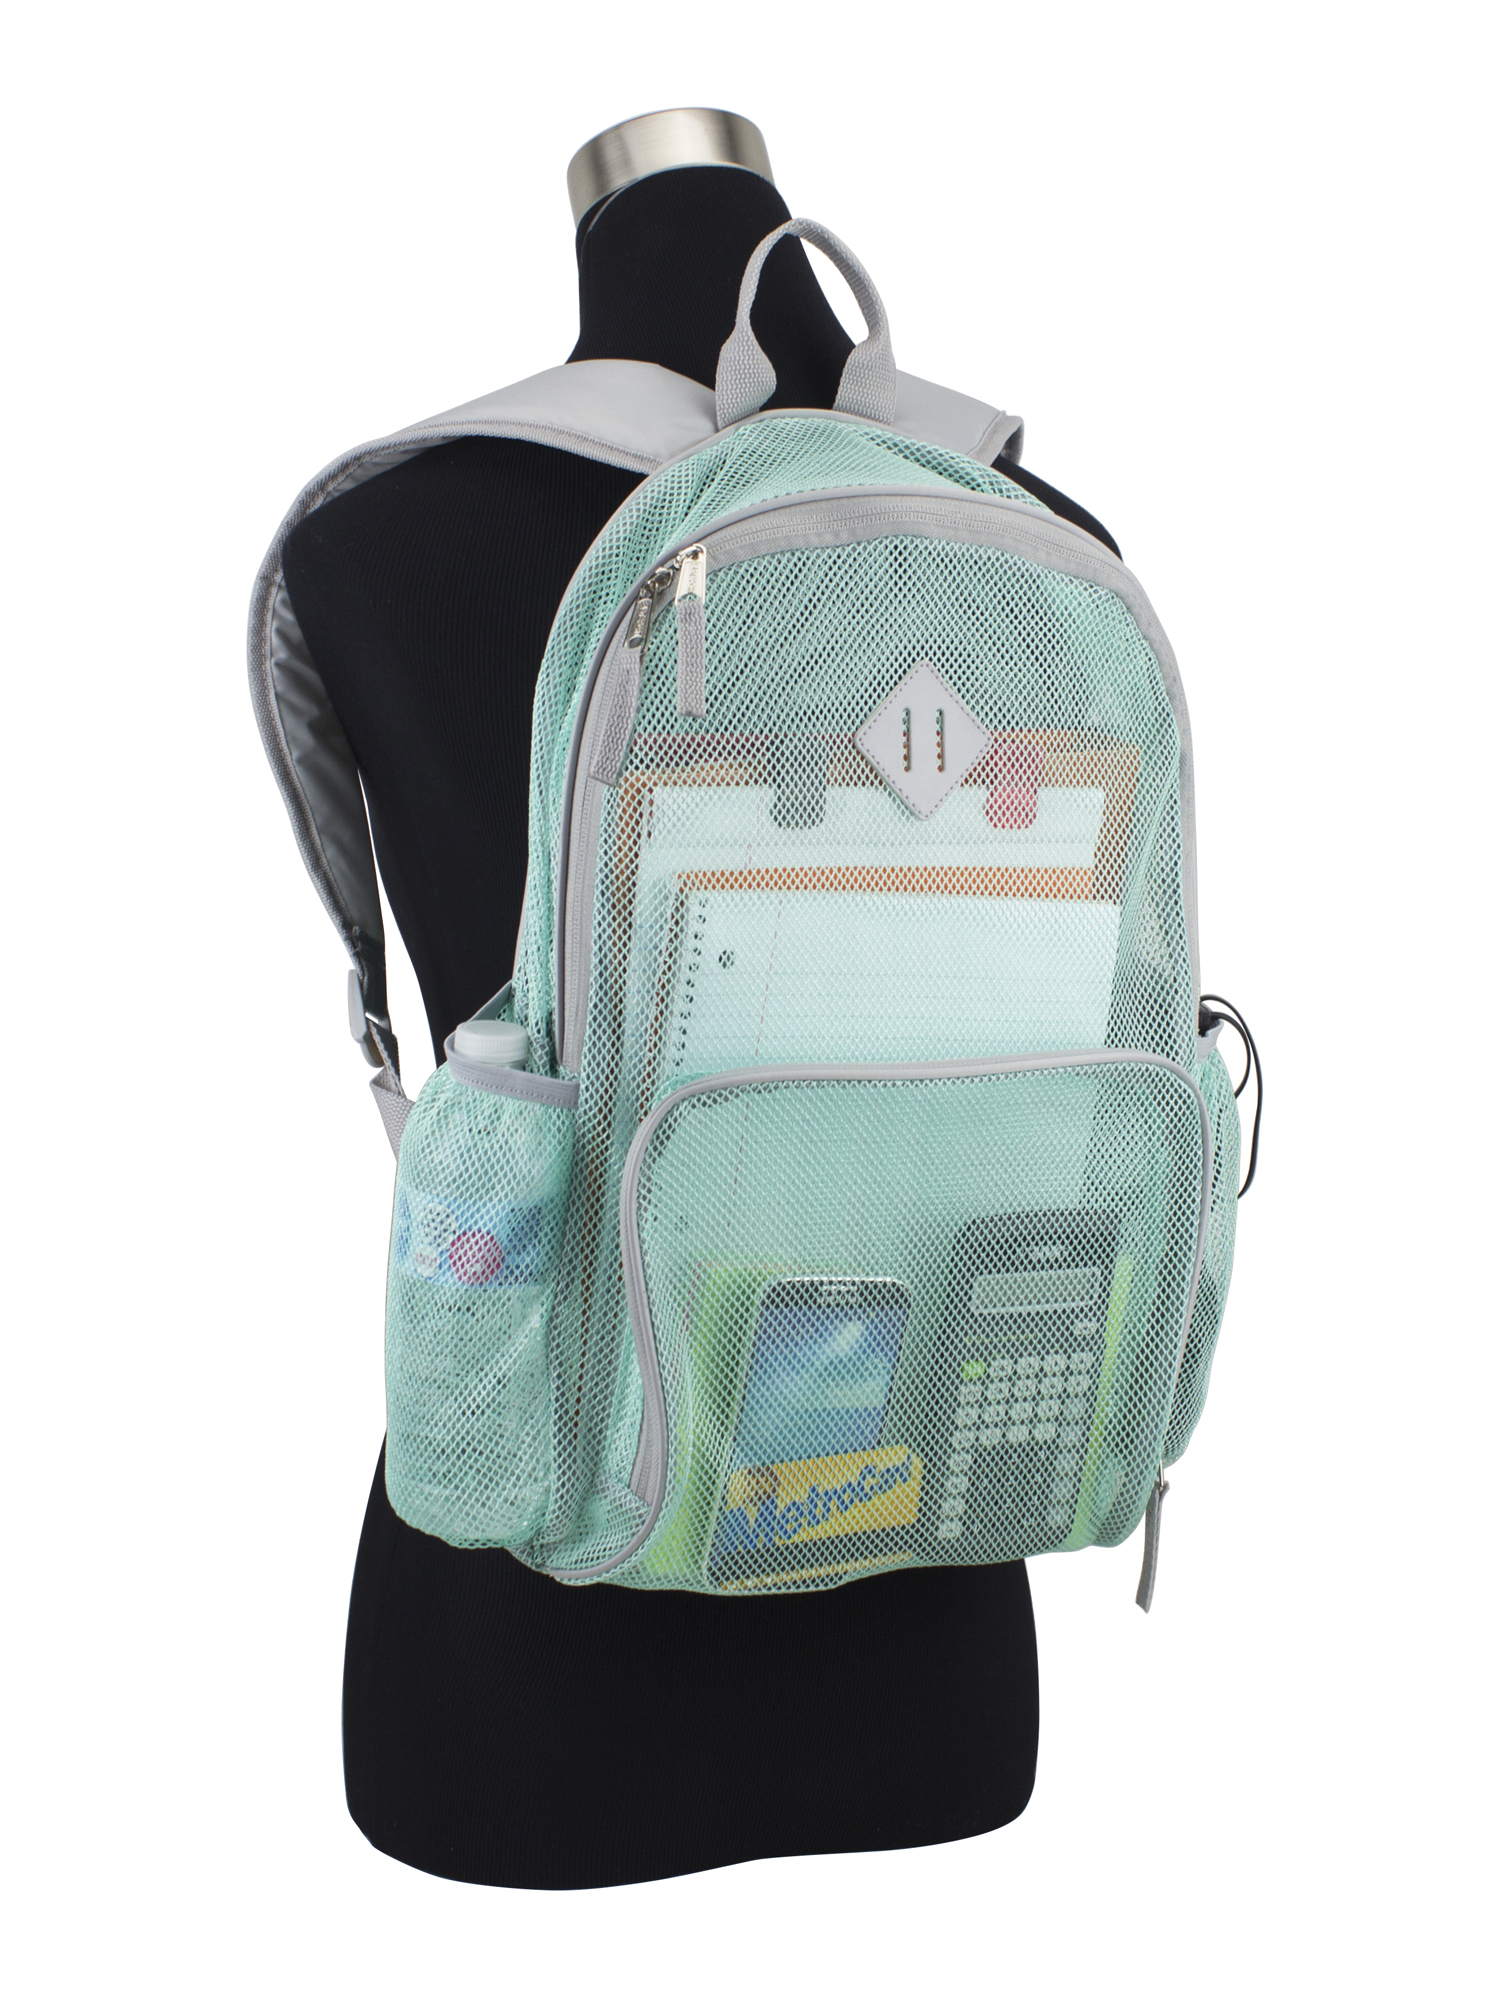 Eastsport Unisex Multi-Purpose Mesh Backpack with Front Pocket Mint - image 4 of 6